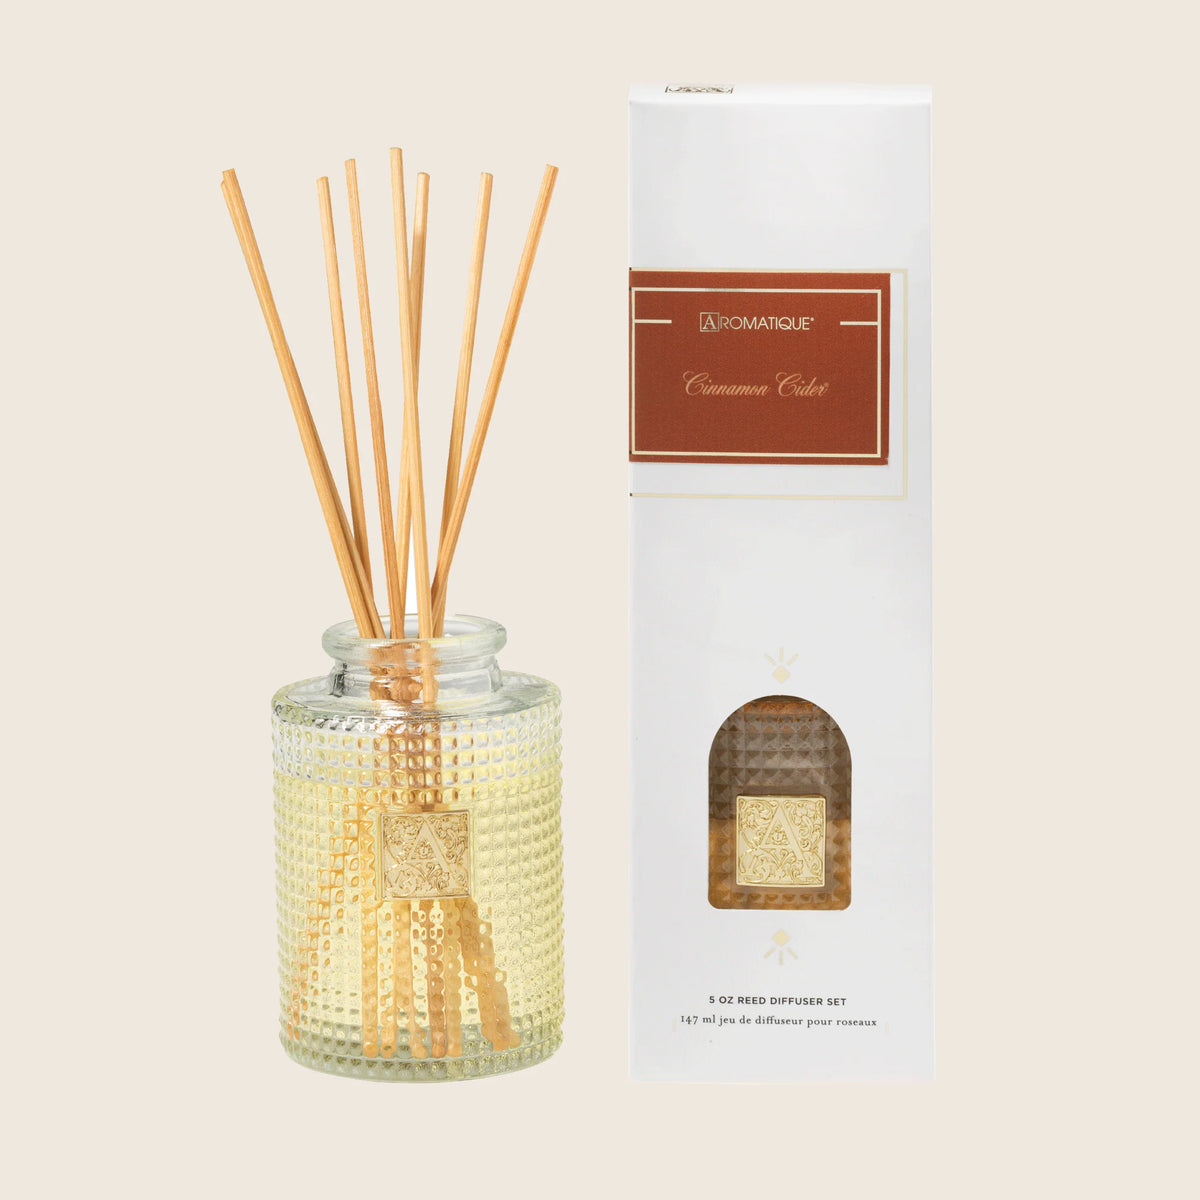 Aromatique - Cinnamon Cider Reed Diffuser Set